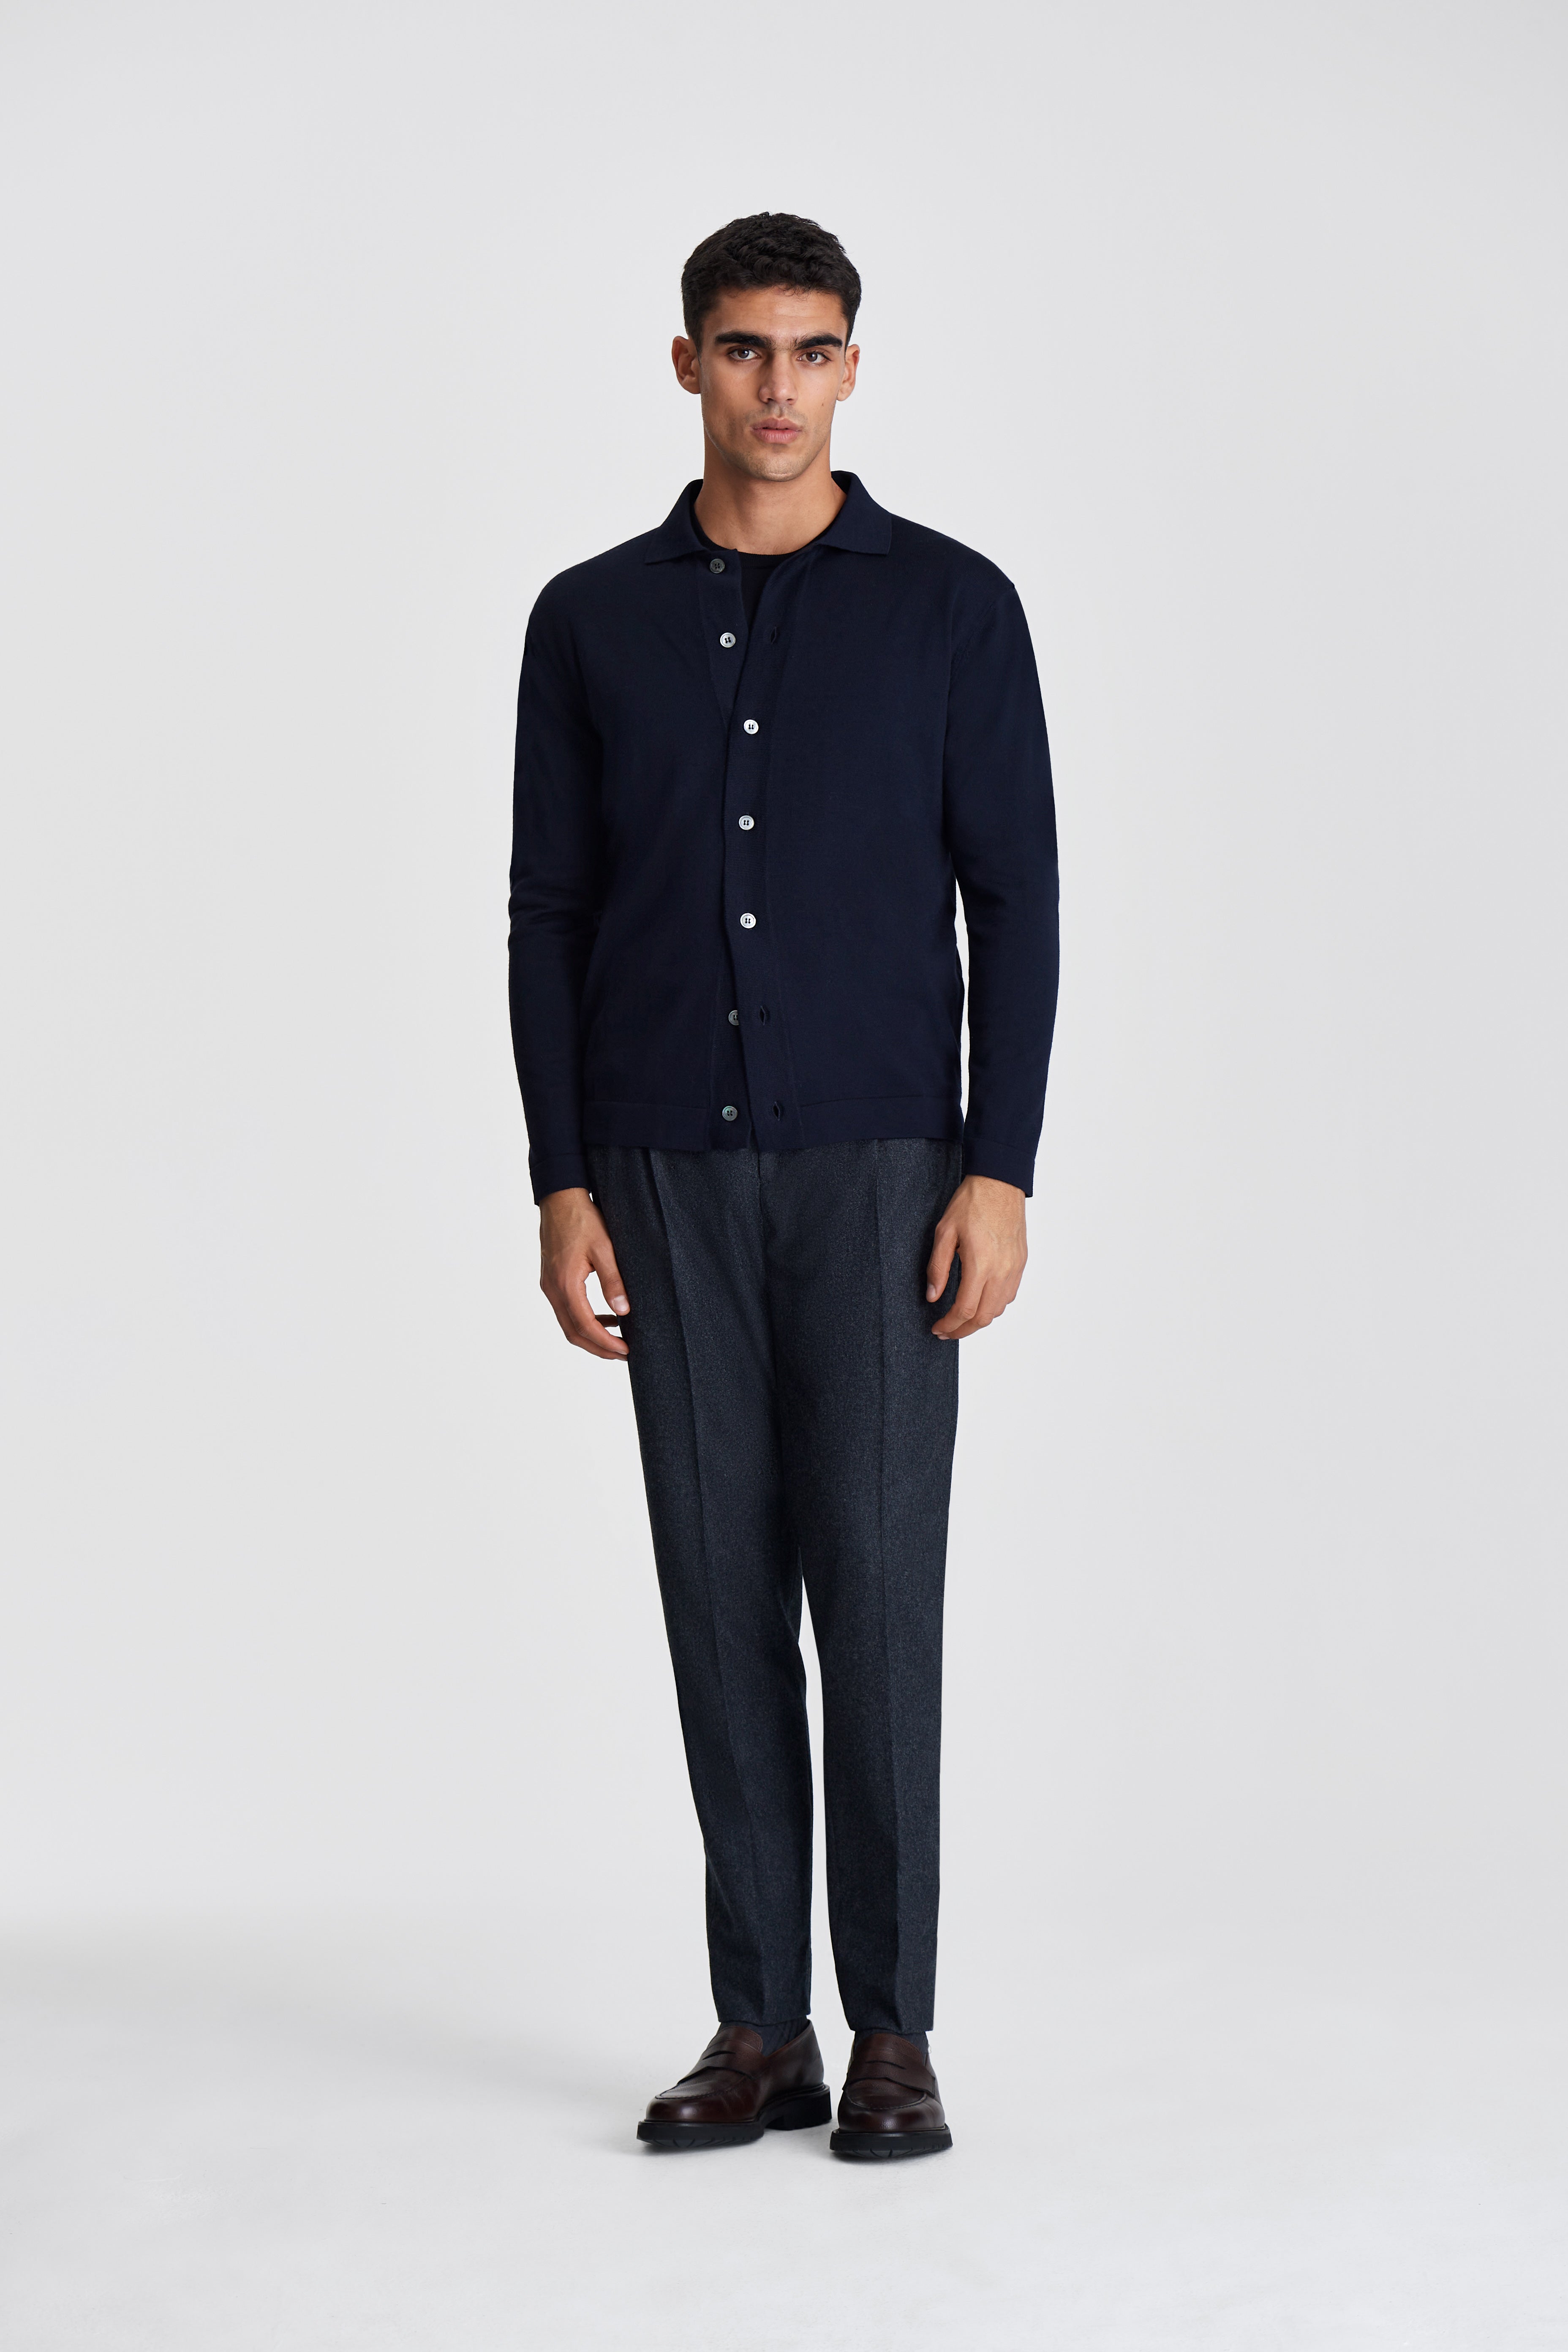 Merino Wool Extrafine Long Sleeve Button Through Polo Shirt Navy Model Image